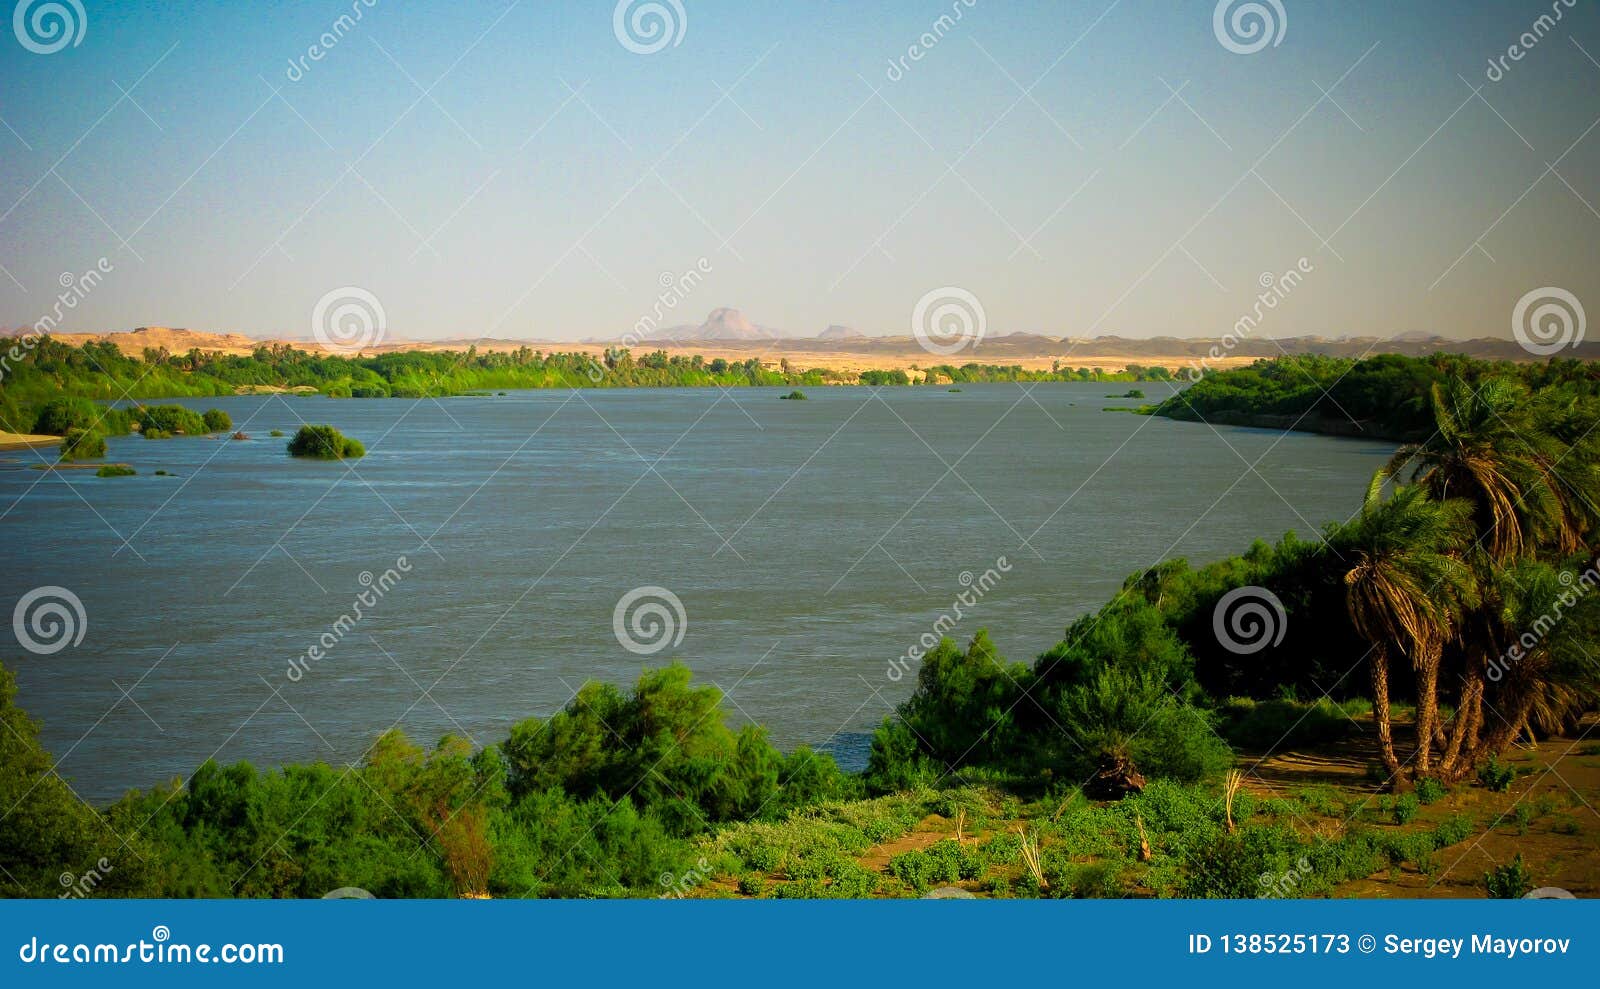 panoramic landscape with the nile river near sai island,kerma, sudan